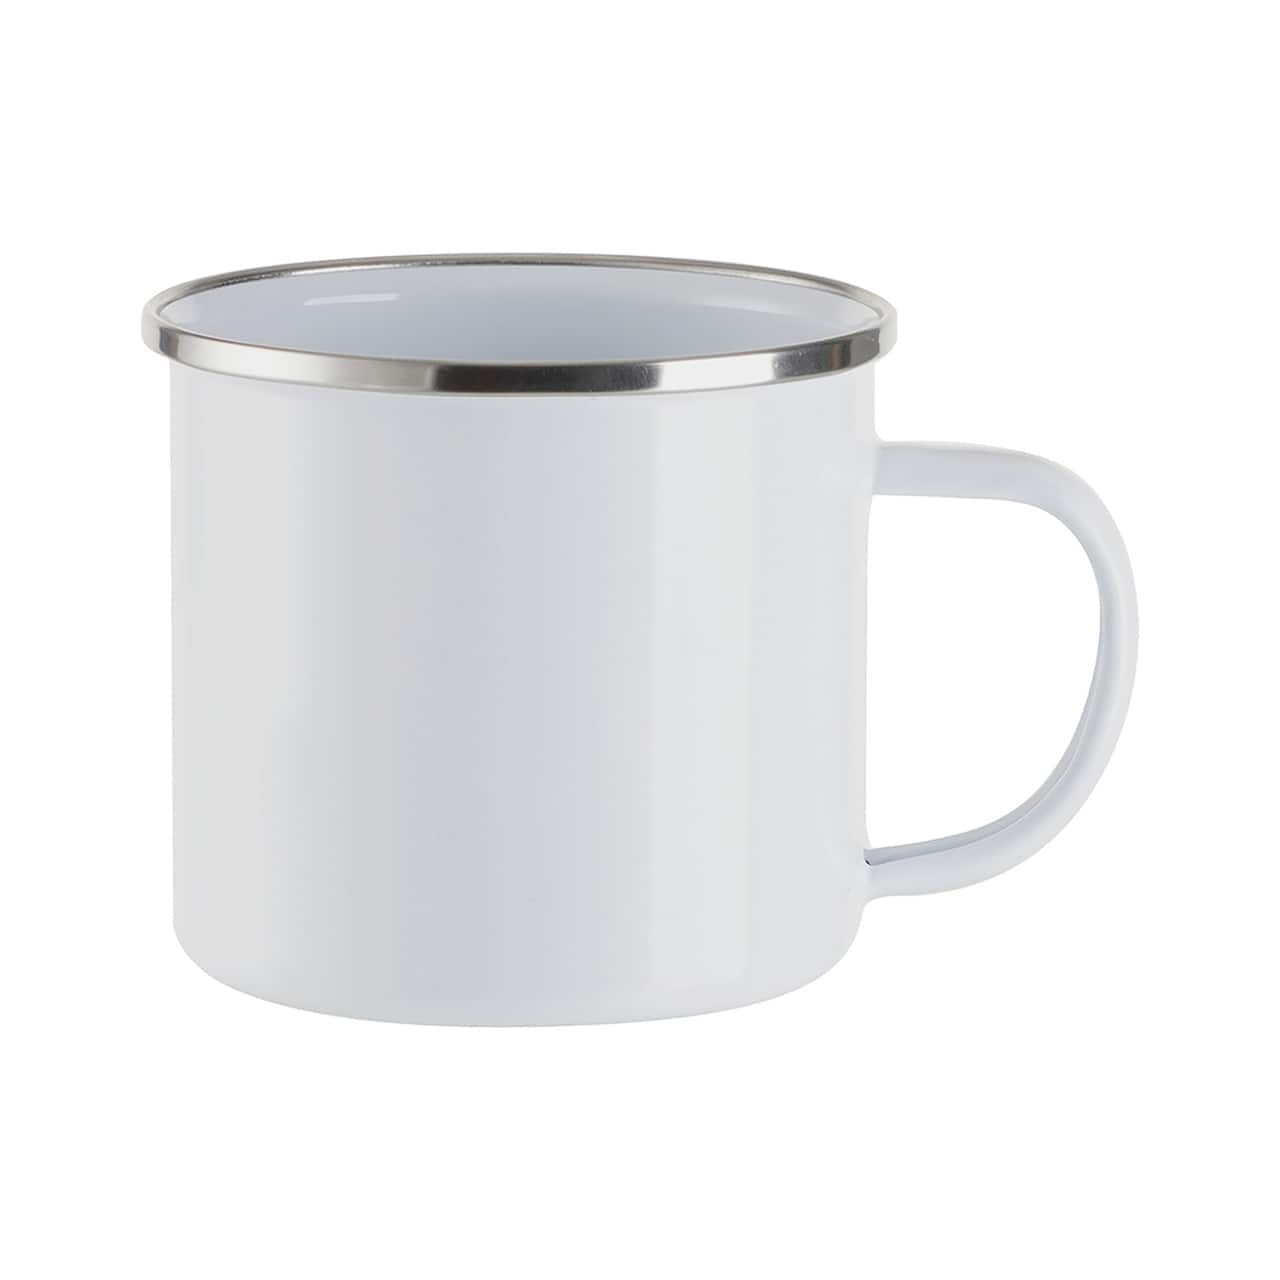 Craft Express 17oz. White Flat-Bottom Enamel Mug, 4ct.